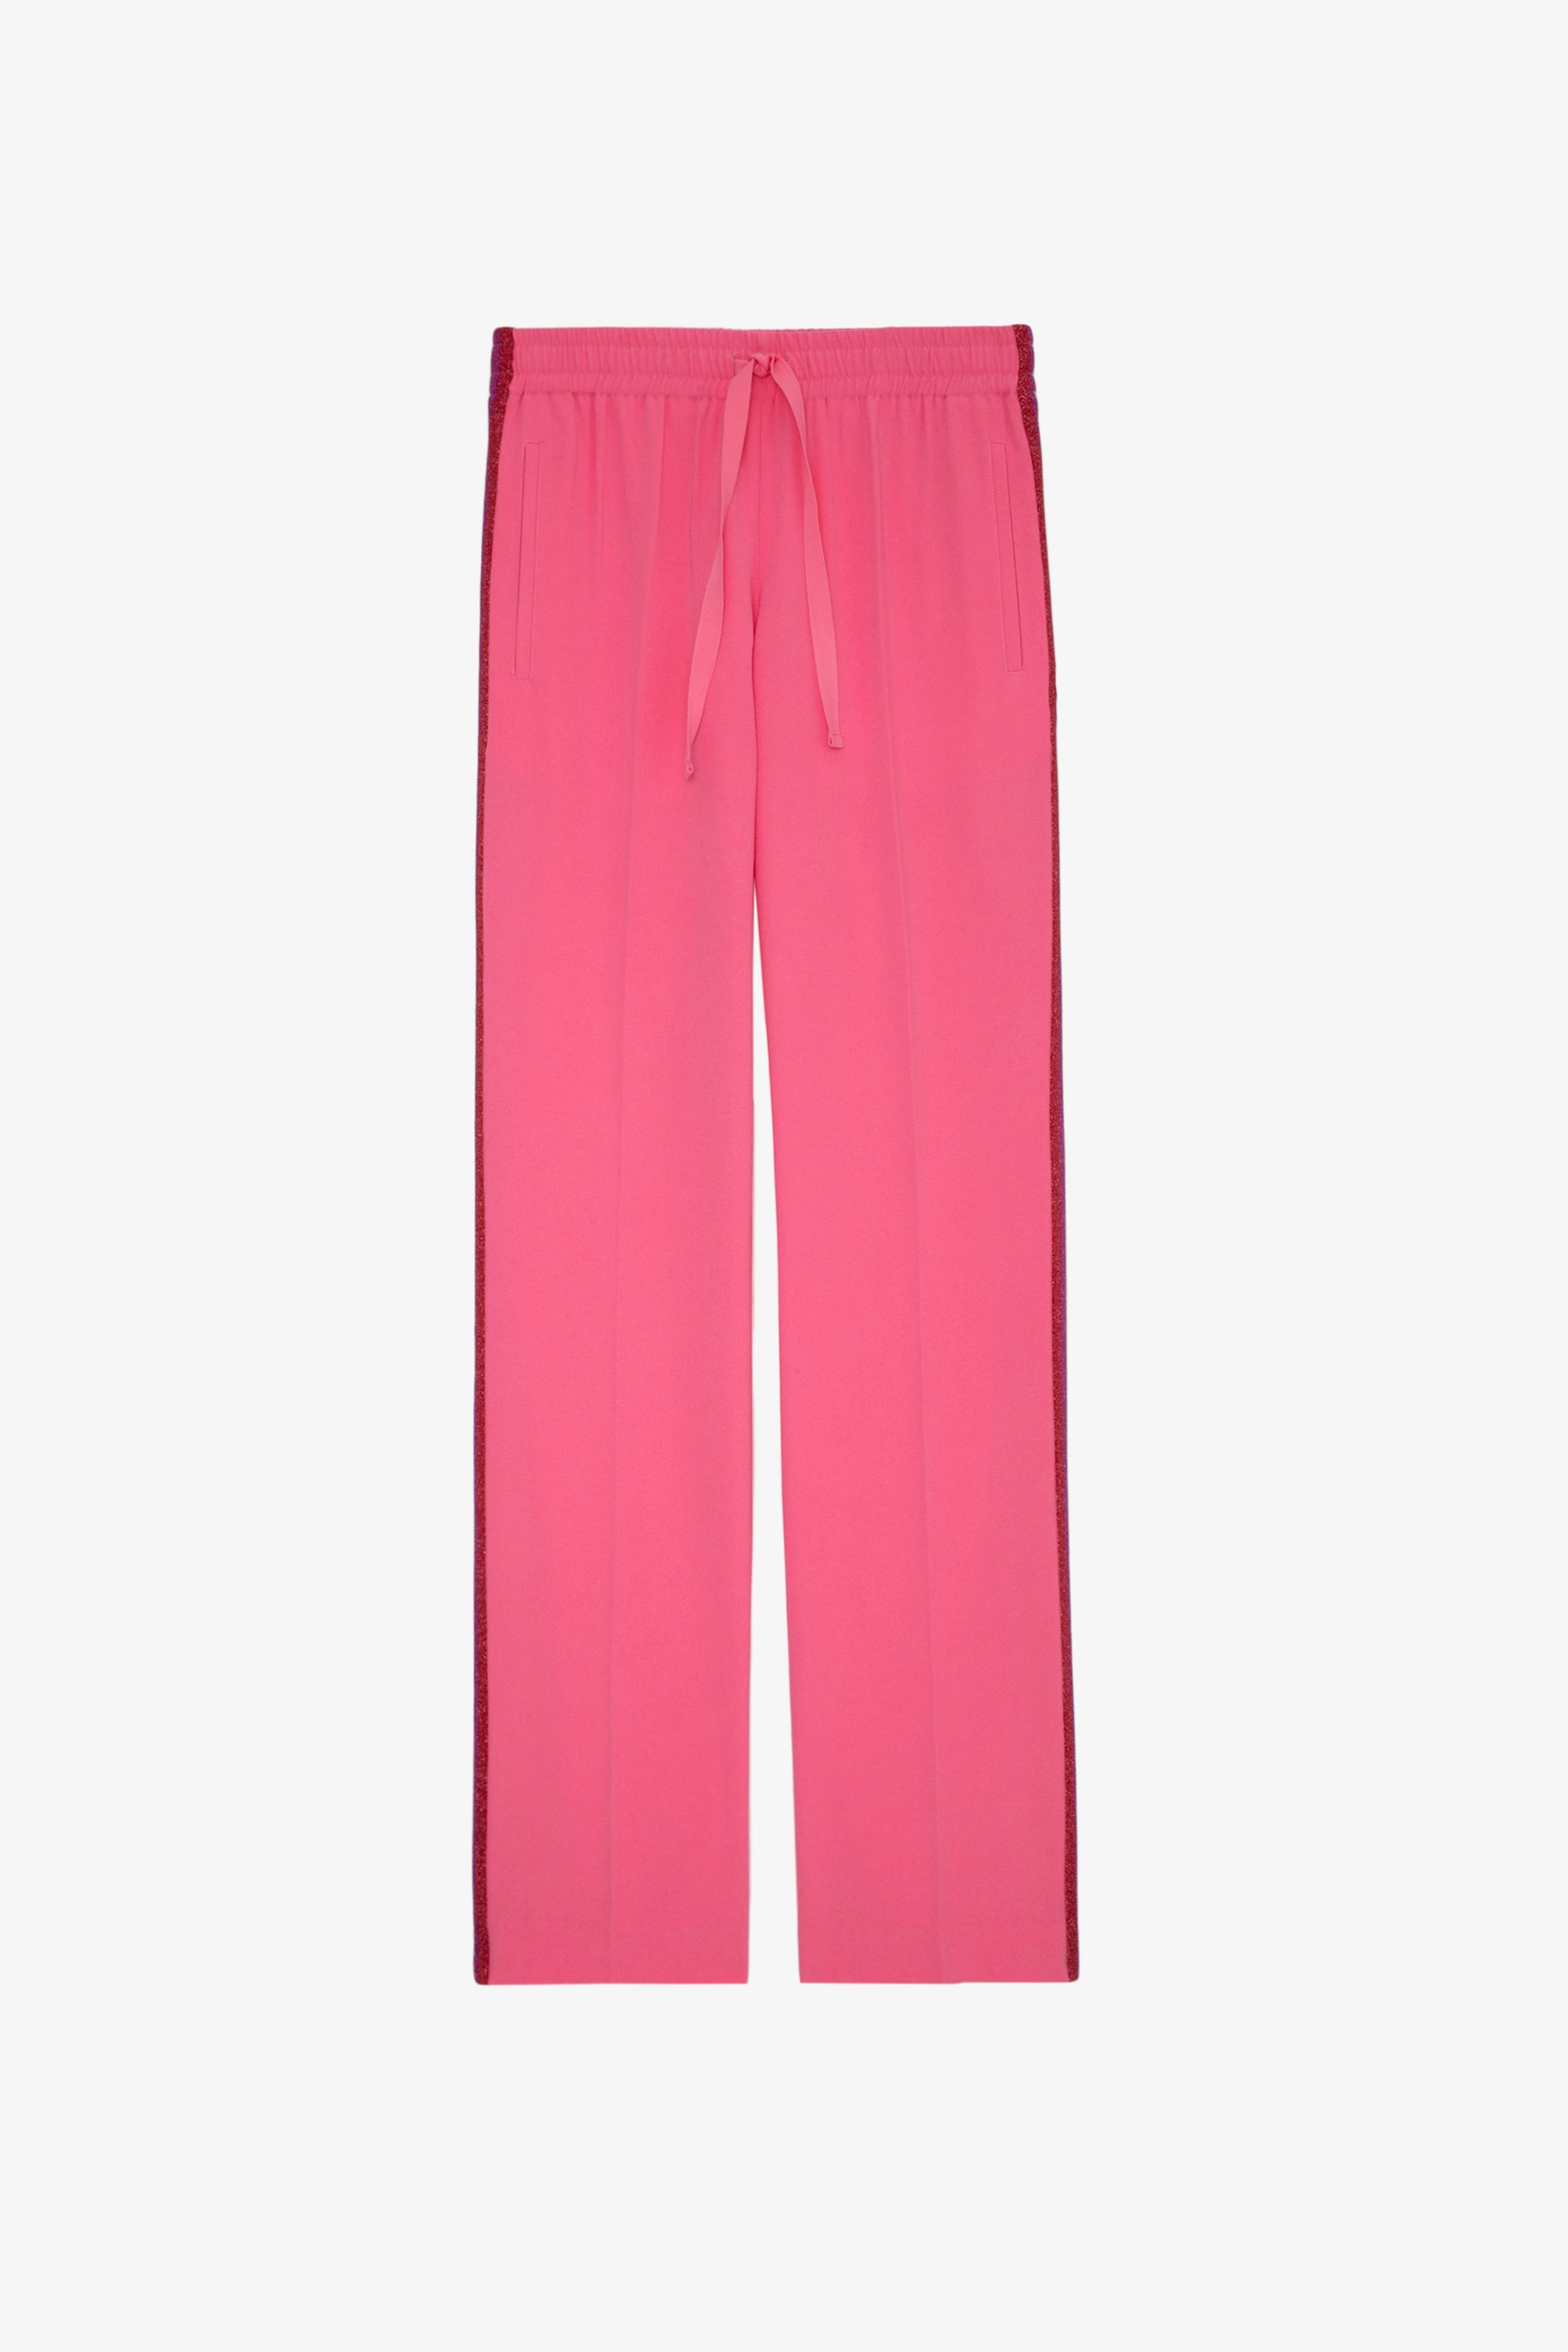 Pantalon Pomy - Pantalon en crêpe rose à bandes latérales pailletées.